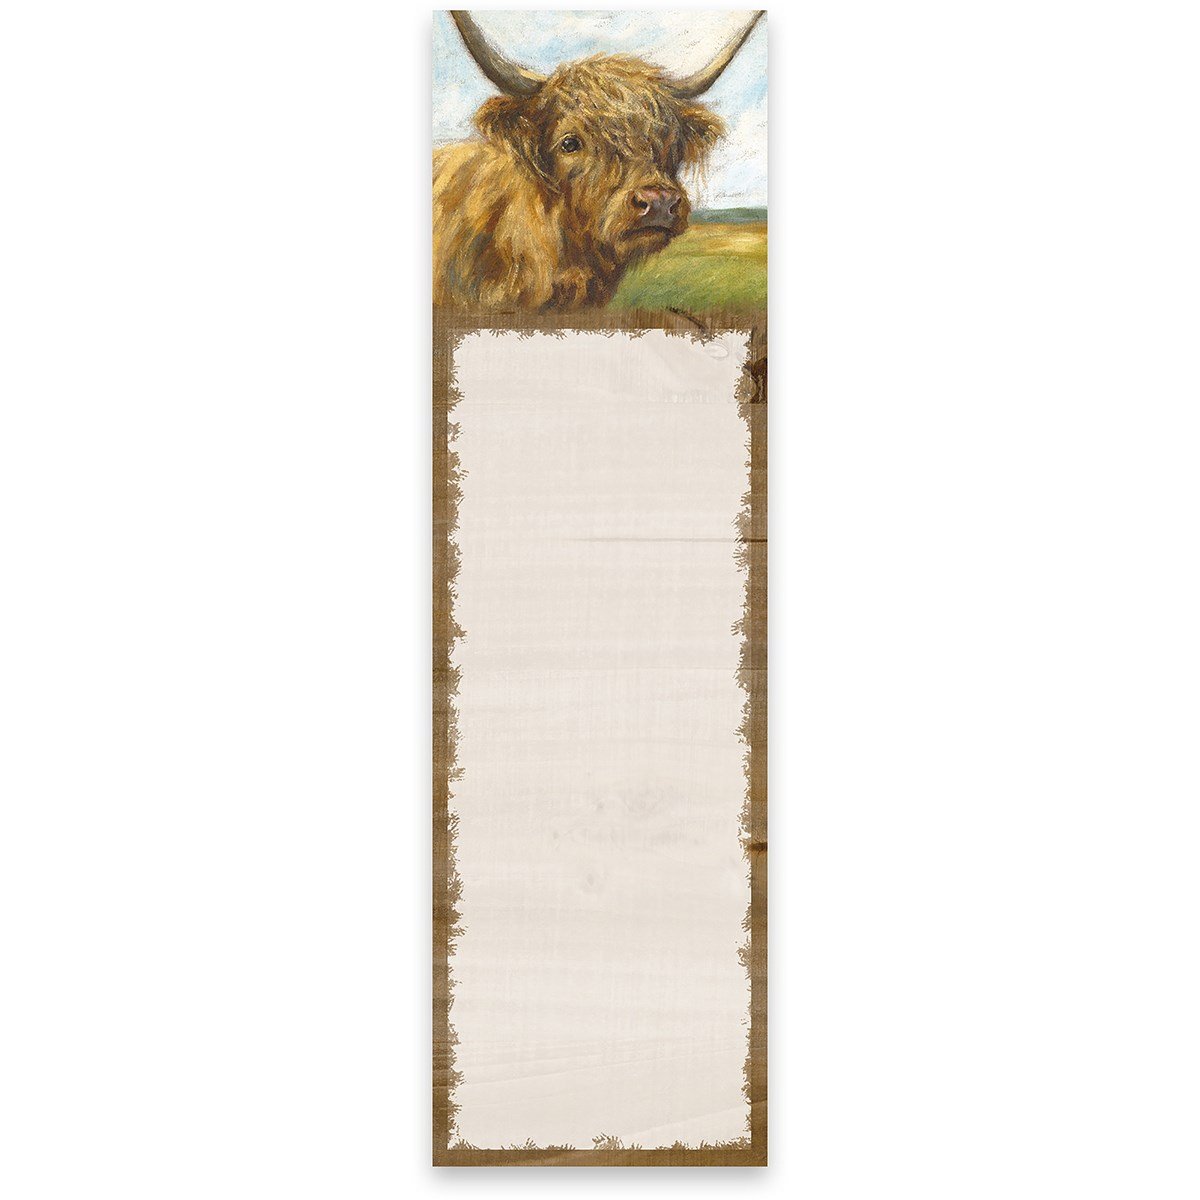 Highland Cow List Notepad